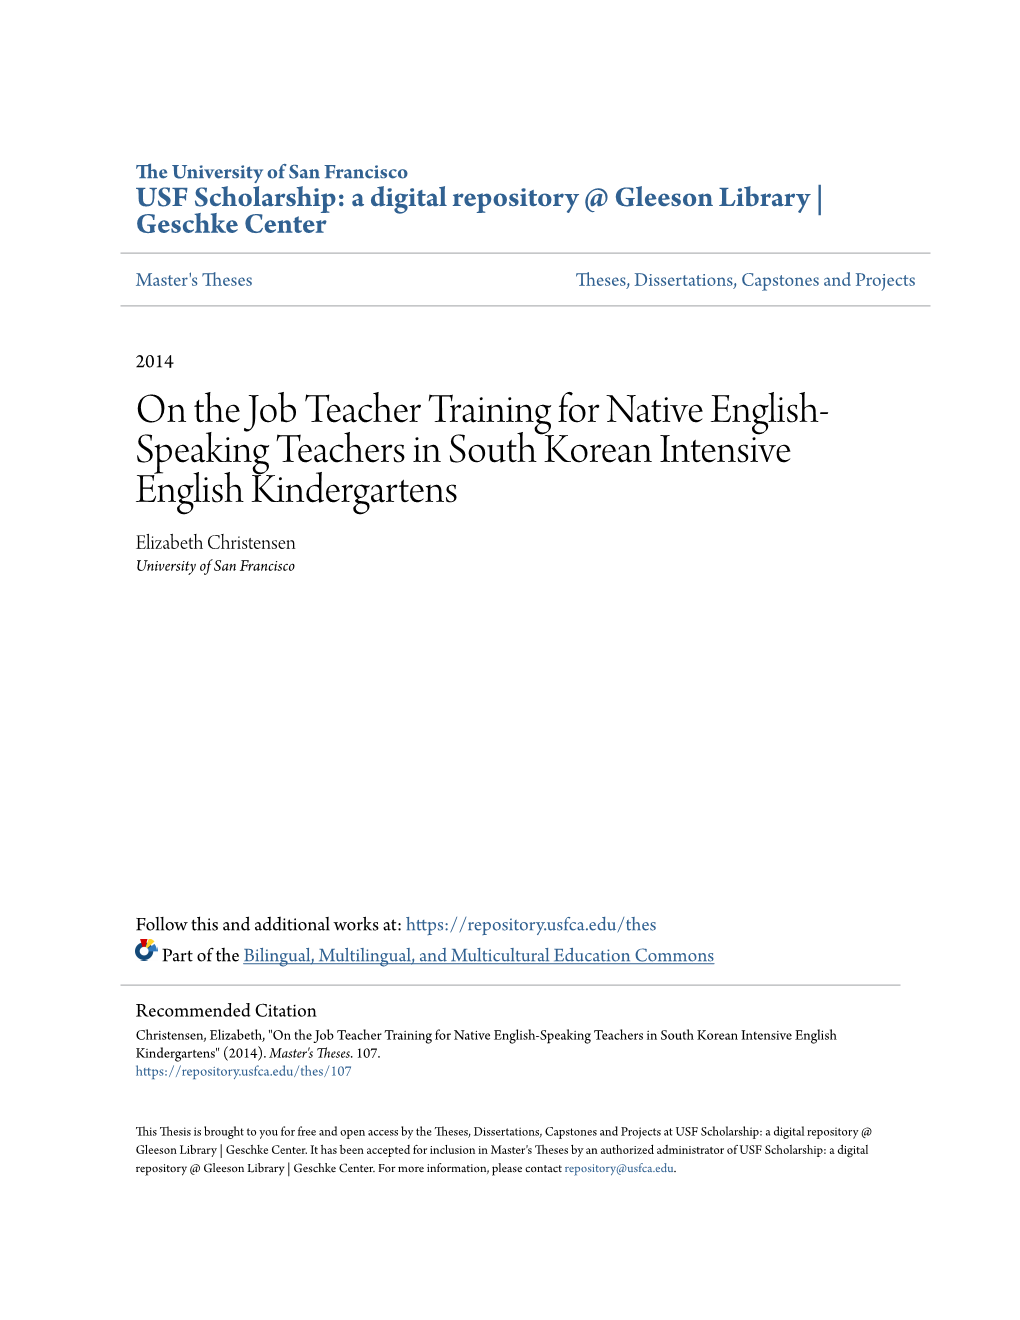 On the Job Teacher Training for Native English-Speaking Teachers in South Korean Intensive English Kindergartens" (2014)